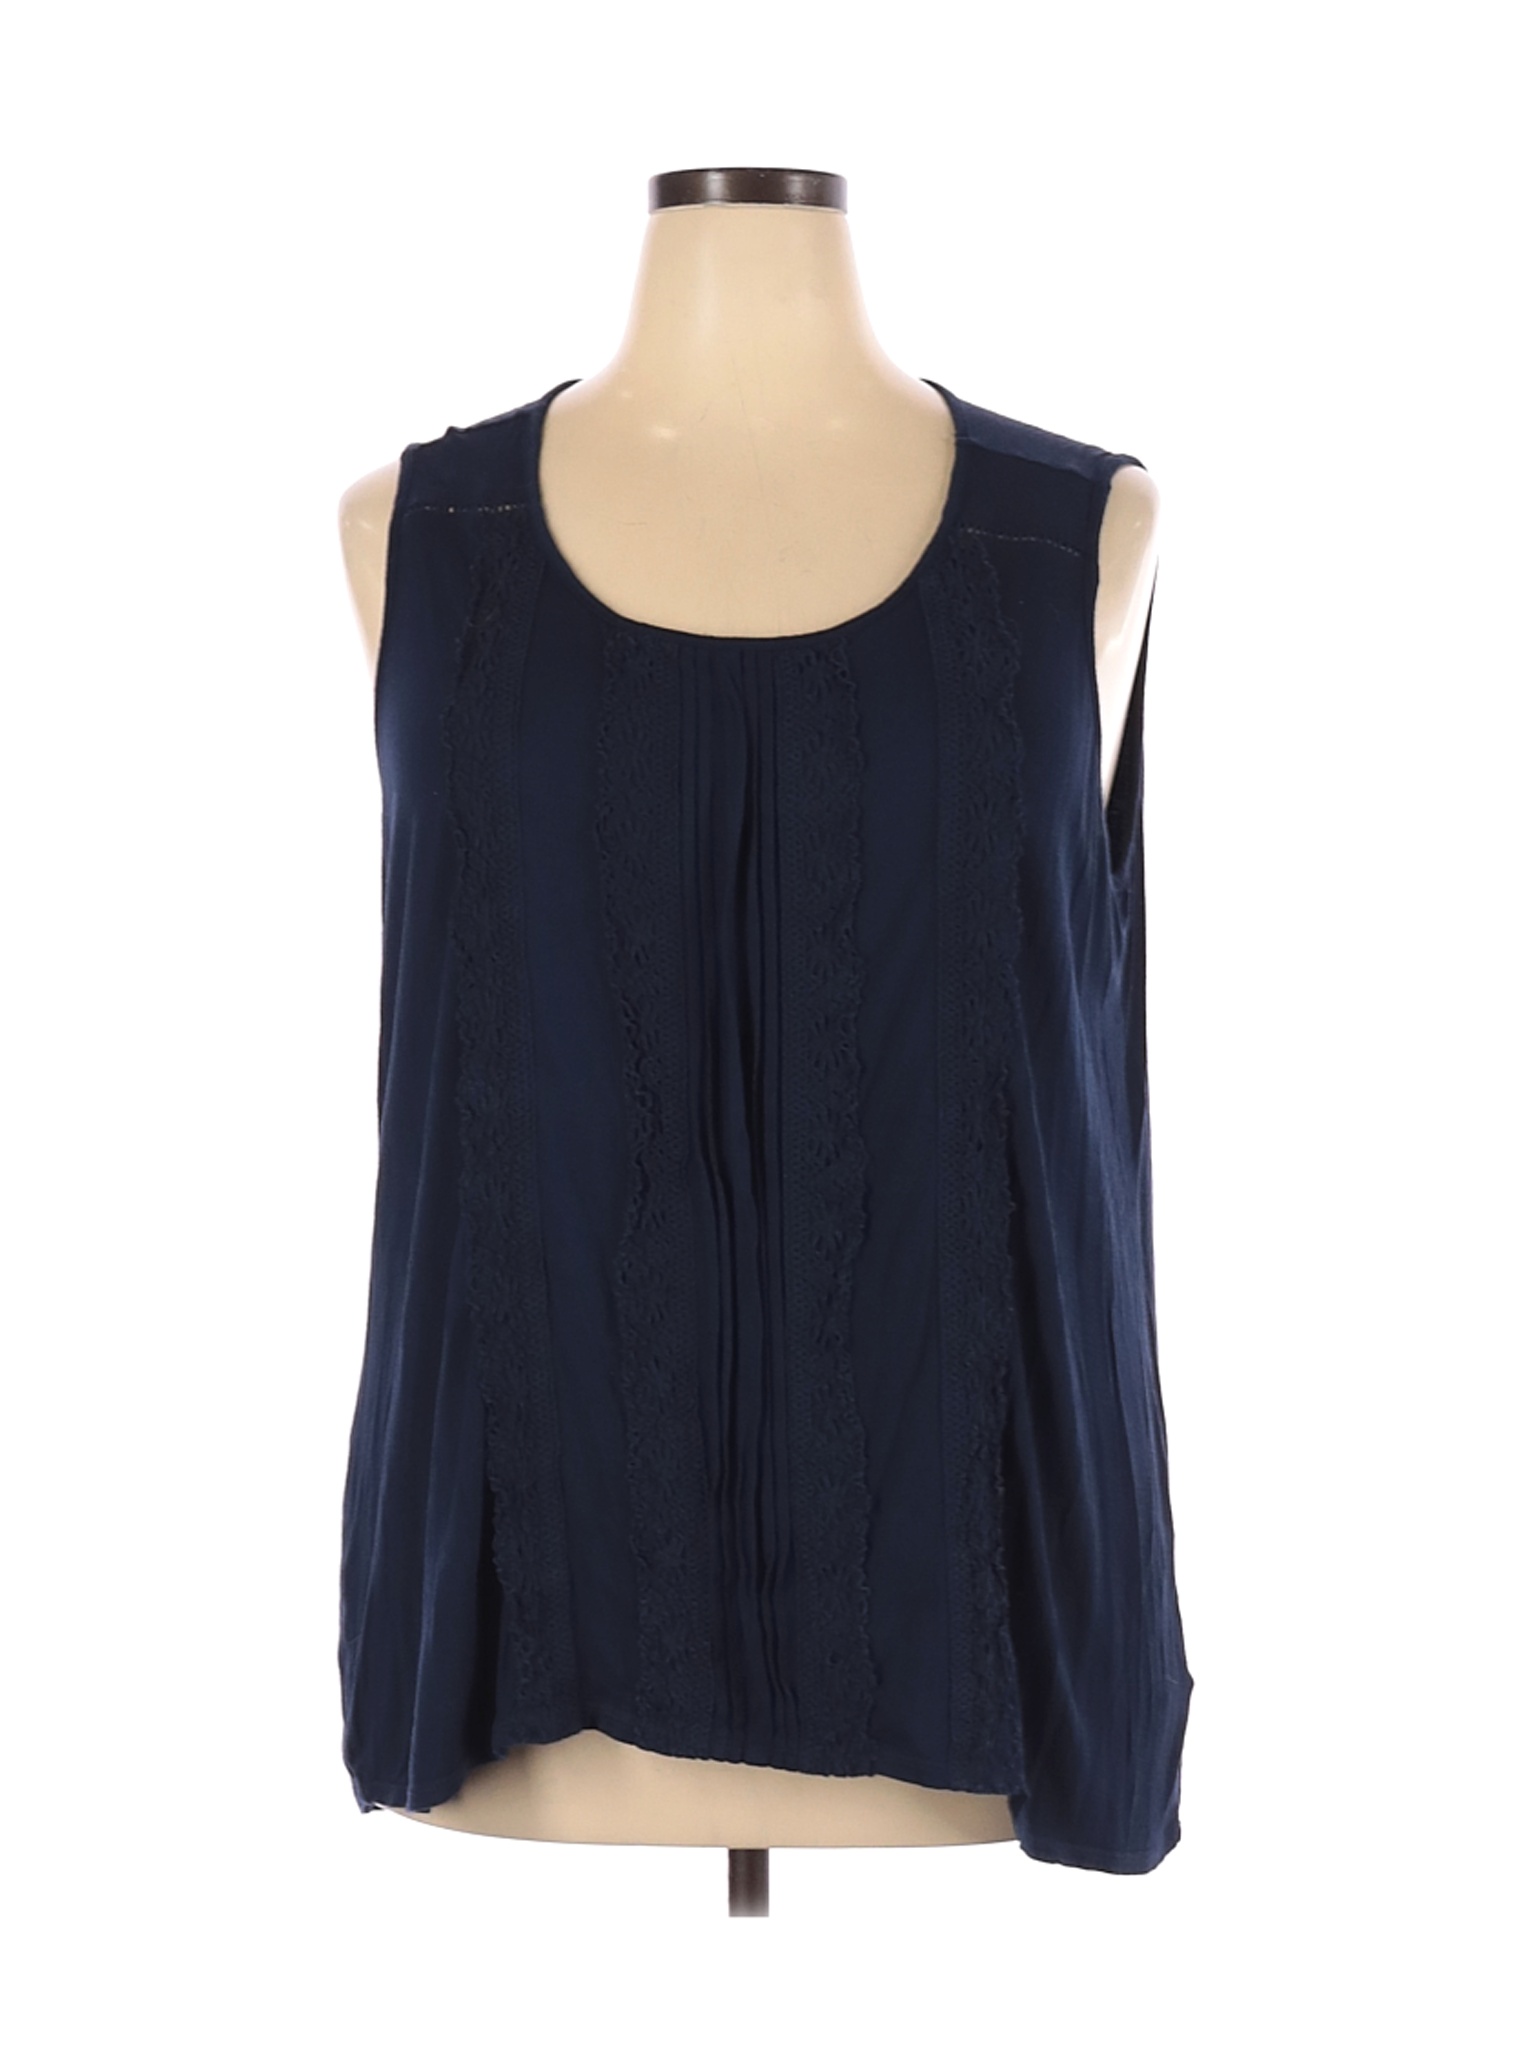 Westport Women Blue Sleeveless Top 3X Plus | eBay